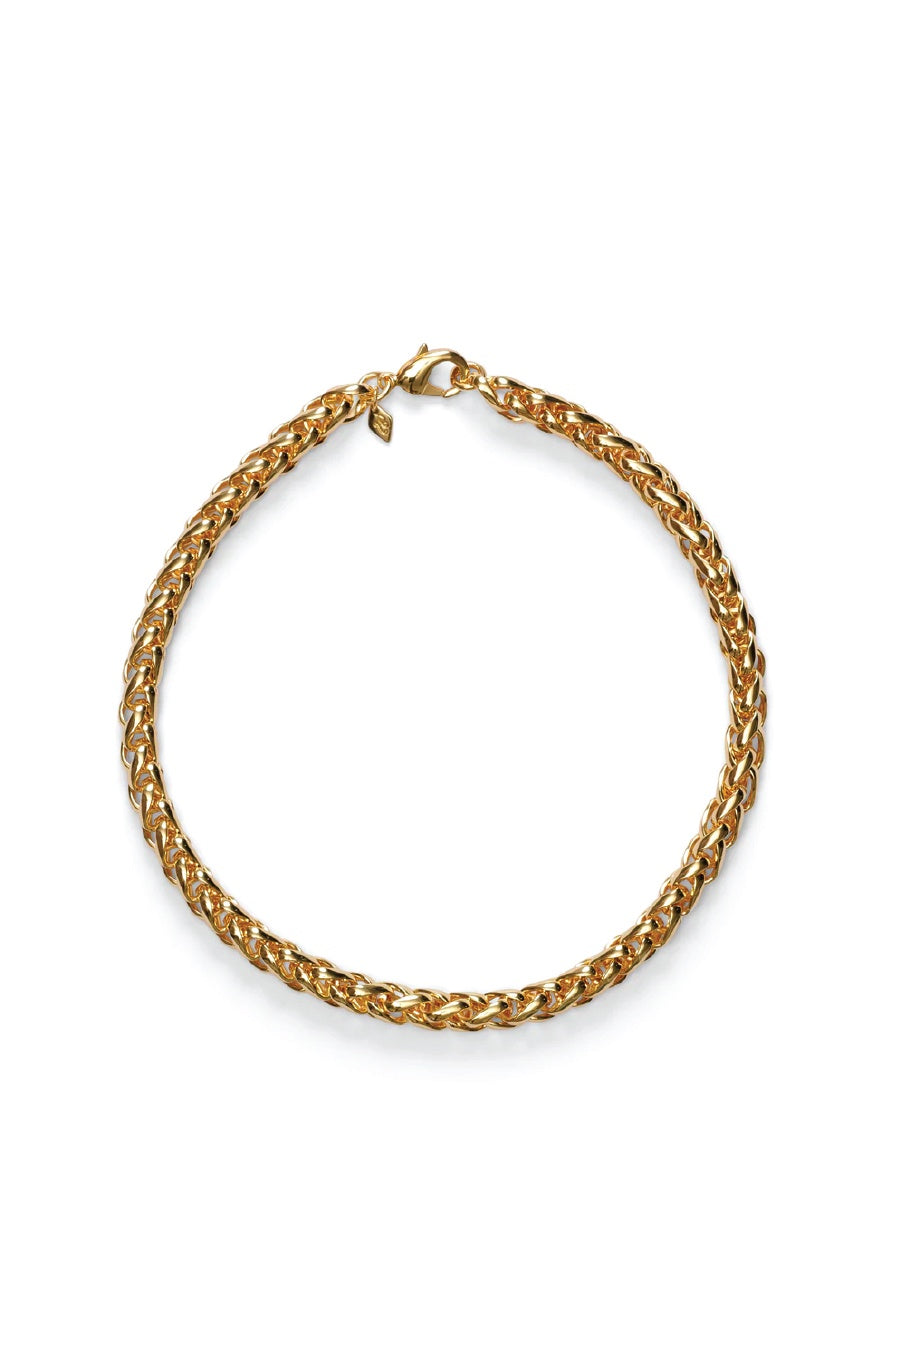 Anni Lu Liquid Gold Necklace - Gold